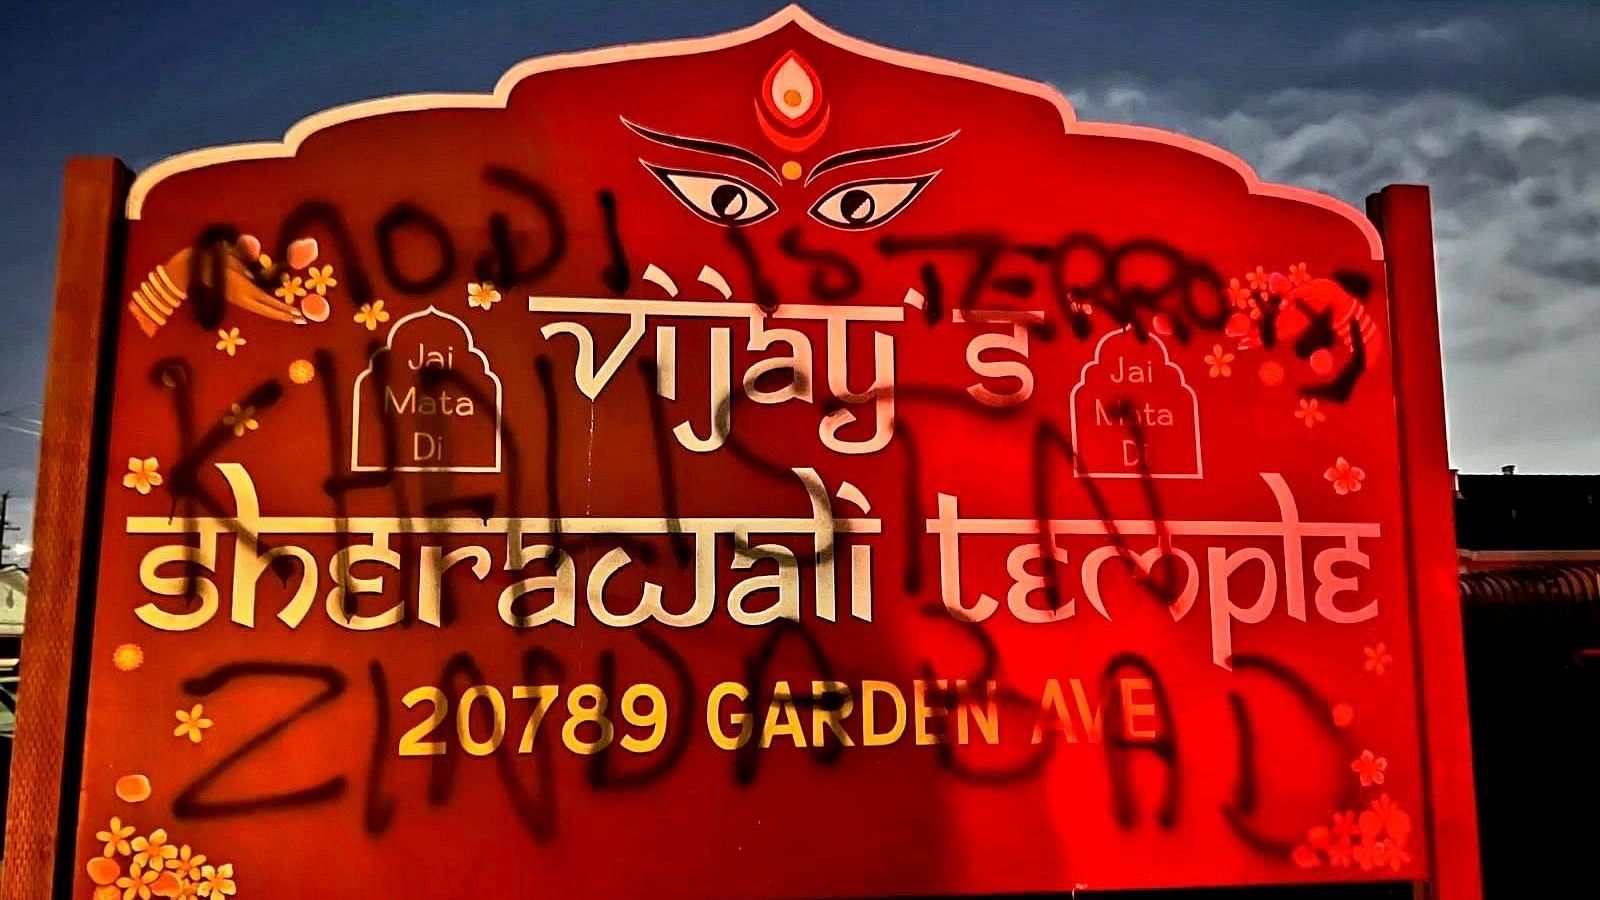 <div class="paragraphs"><p>A Hindu temple was vandalised in San Francisco, California with pro-Khalistan graffiti.</p></div>